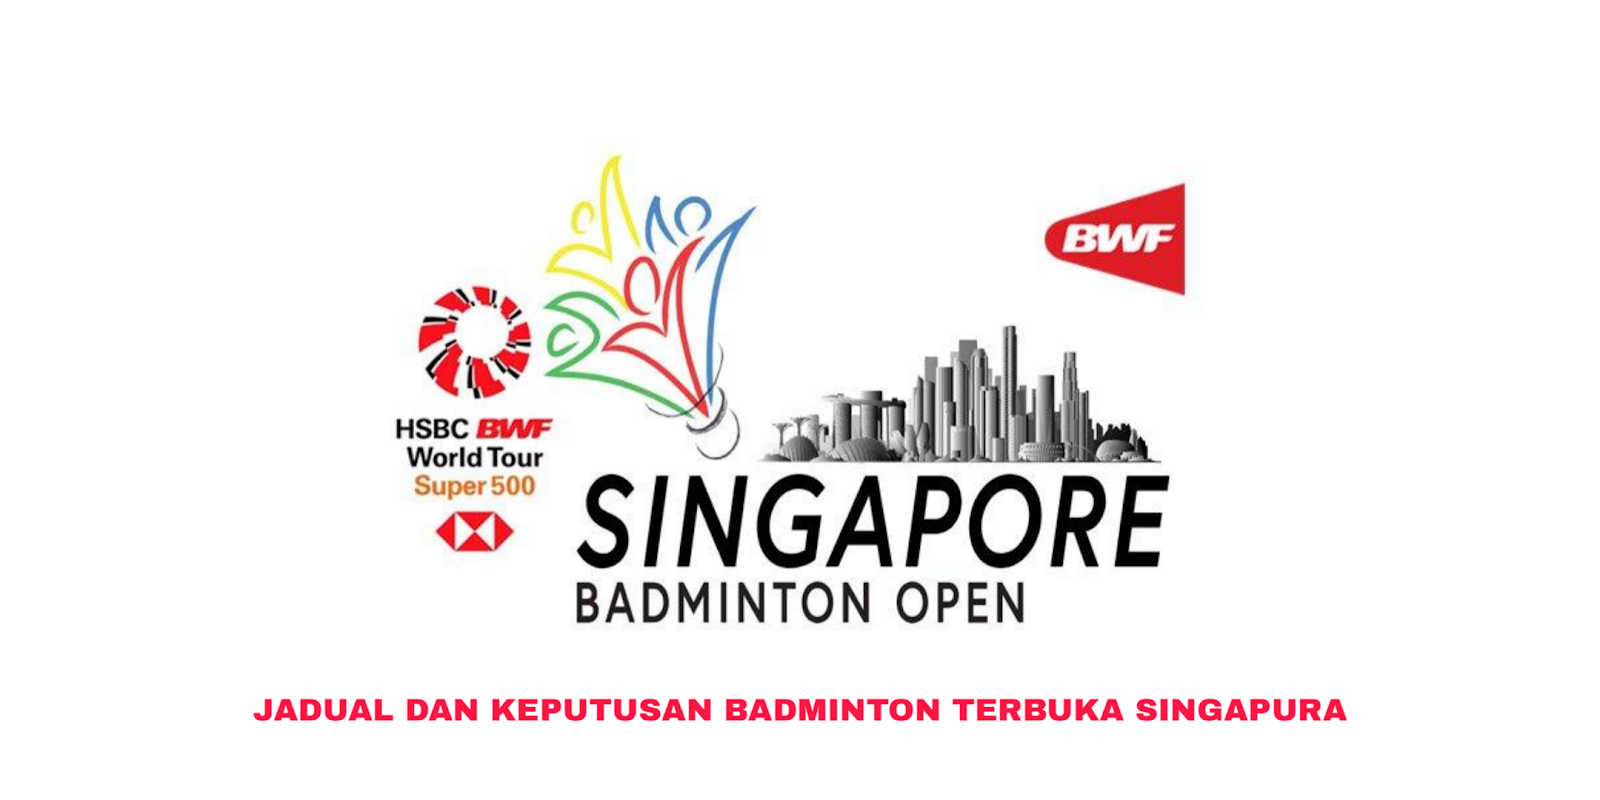 Jadual Badminton Terbuka Singapura 2020 (Keputusan)